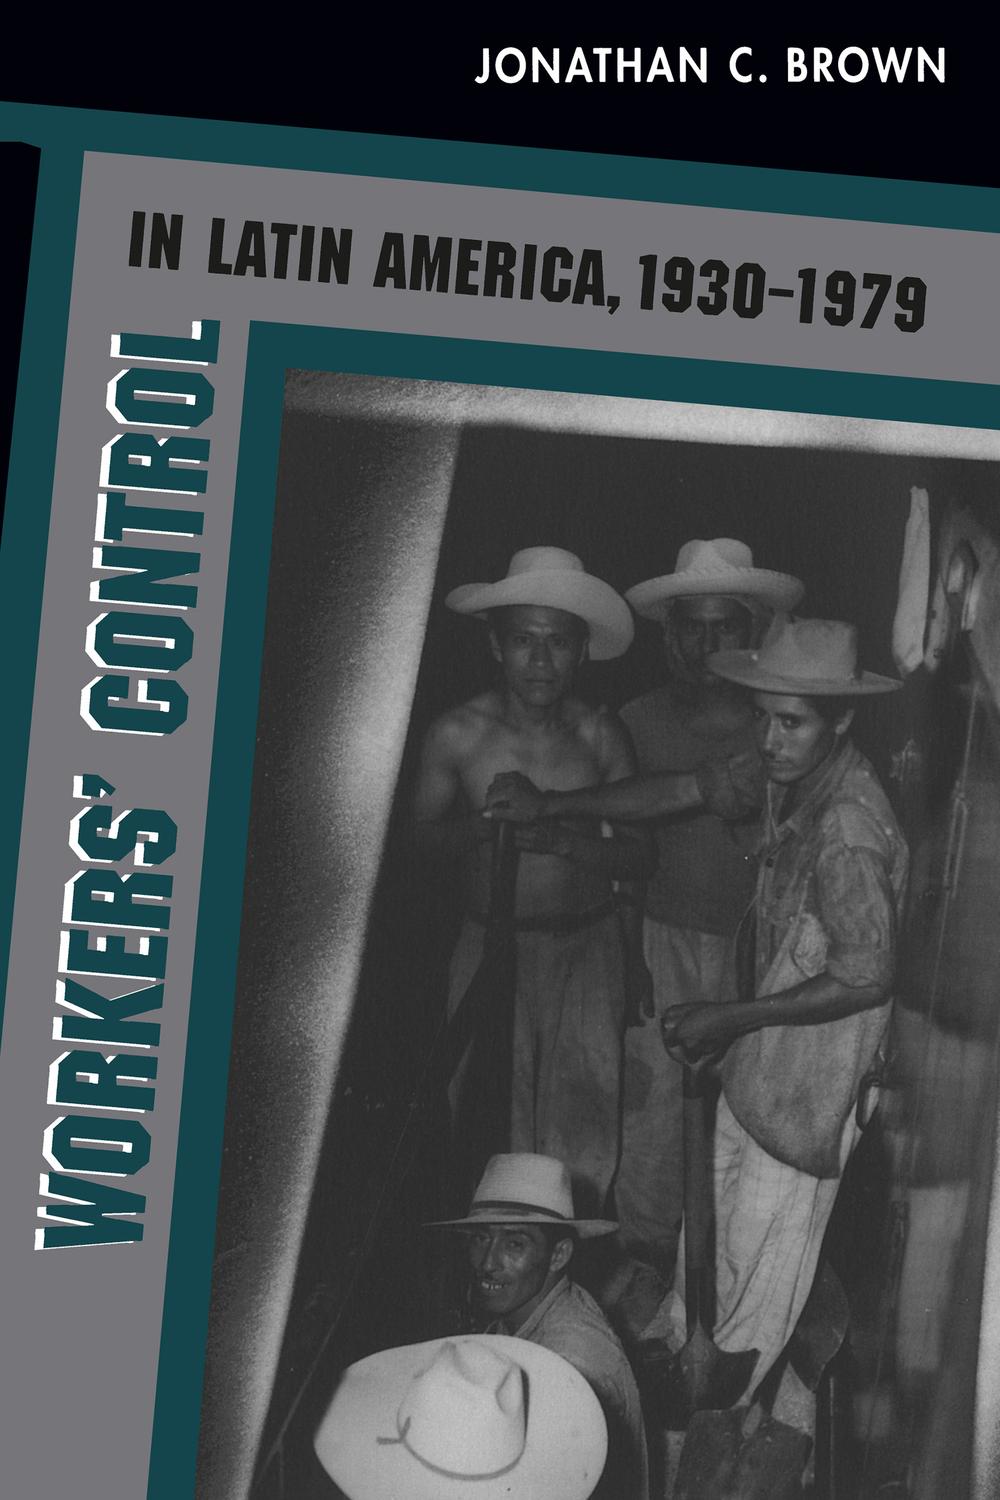 Workers' Control in Latin America, 1930-1979 - Jonathan C. Brown